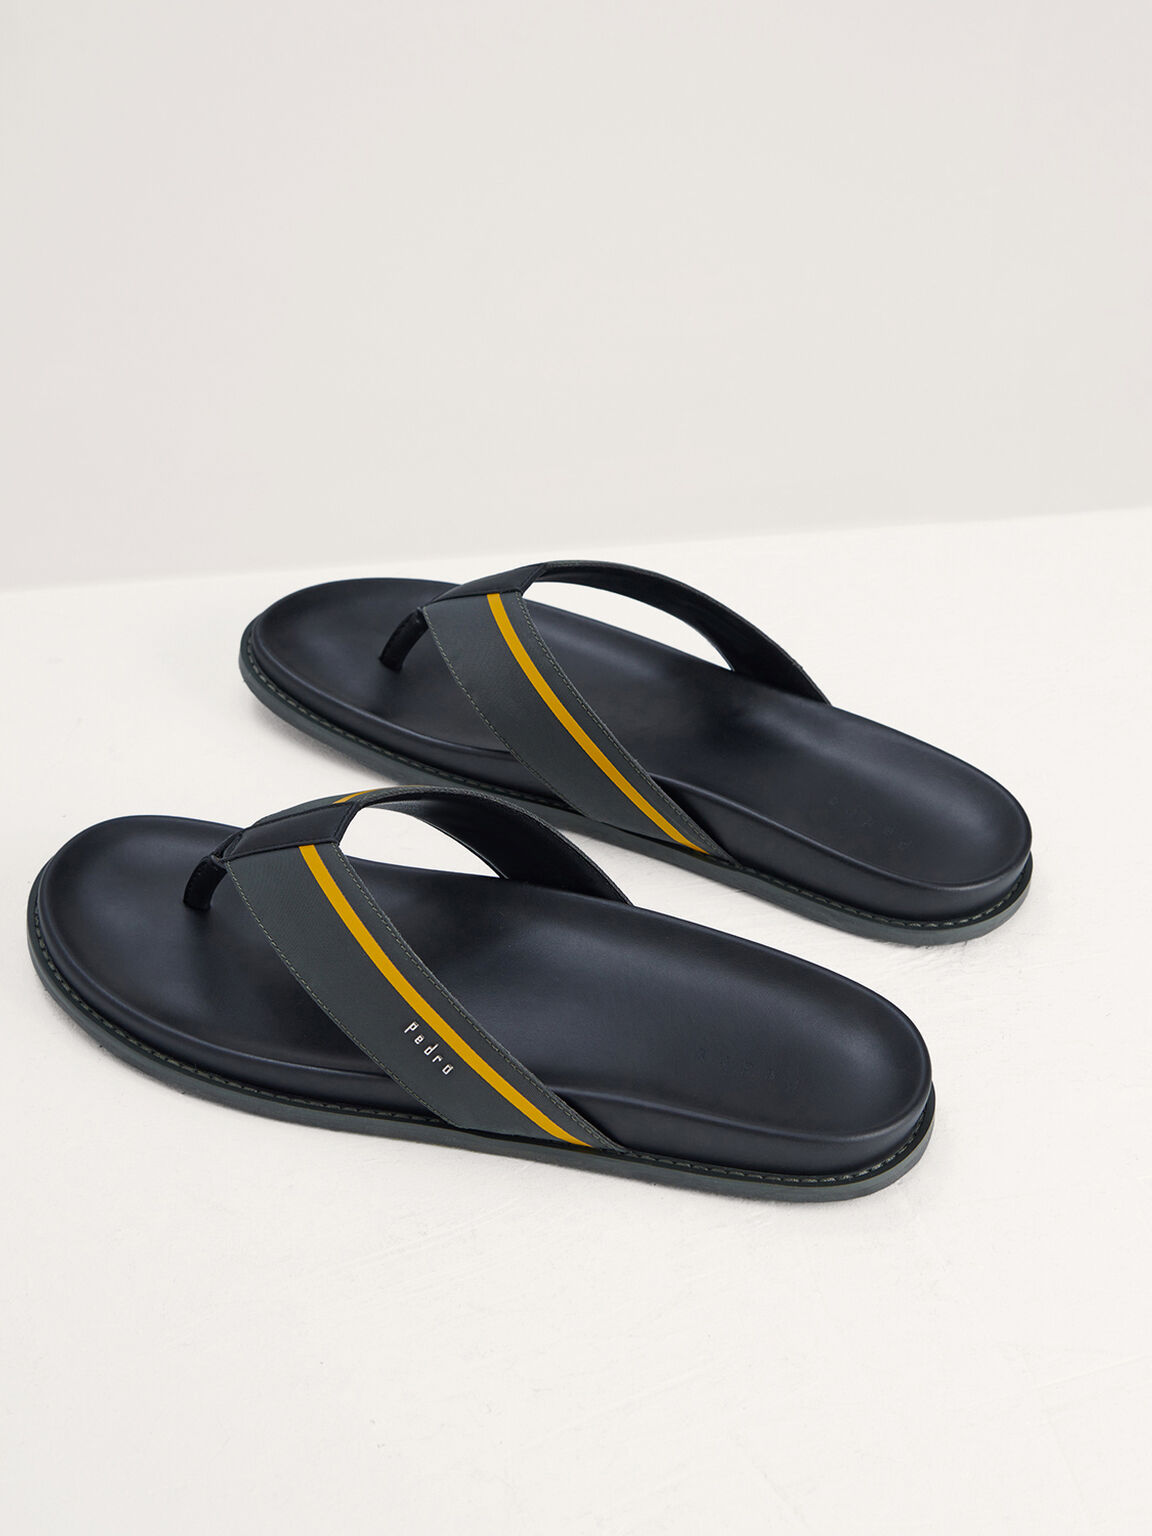 Nylon Thong Sandals, Dark Grey